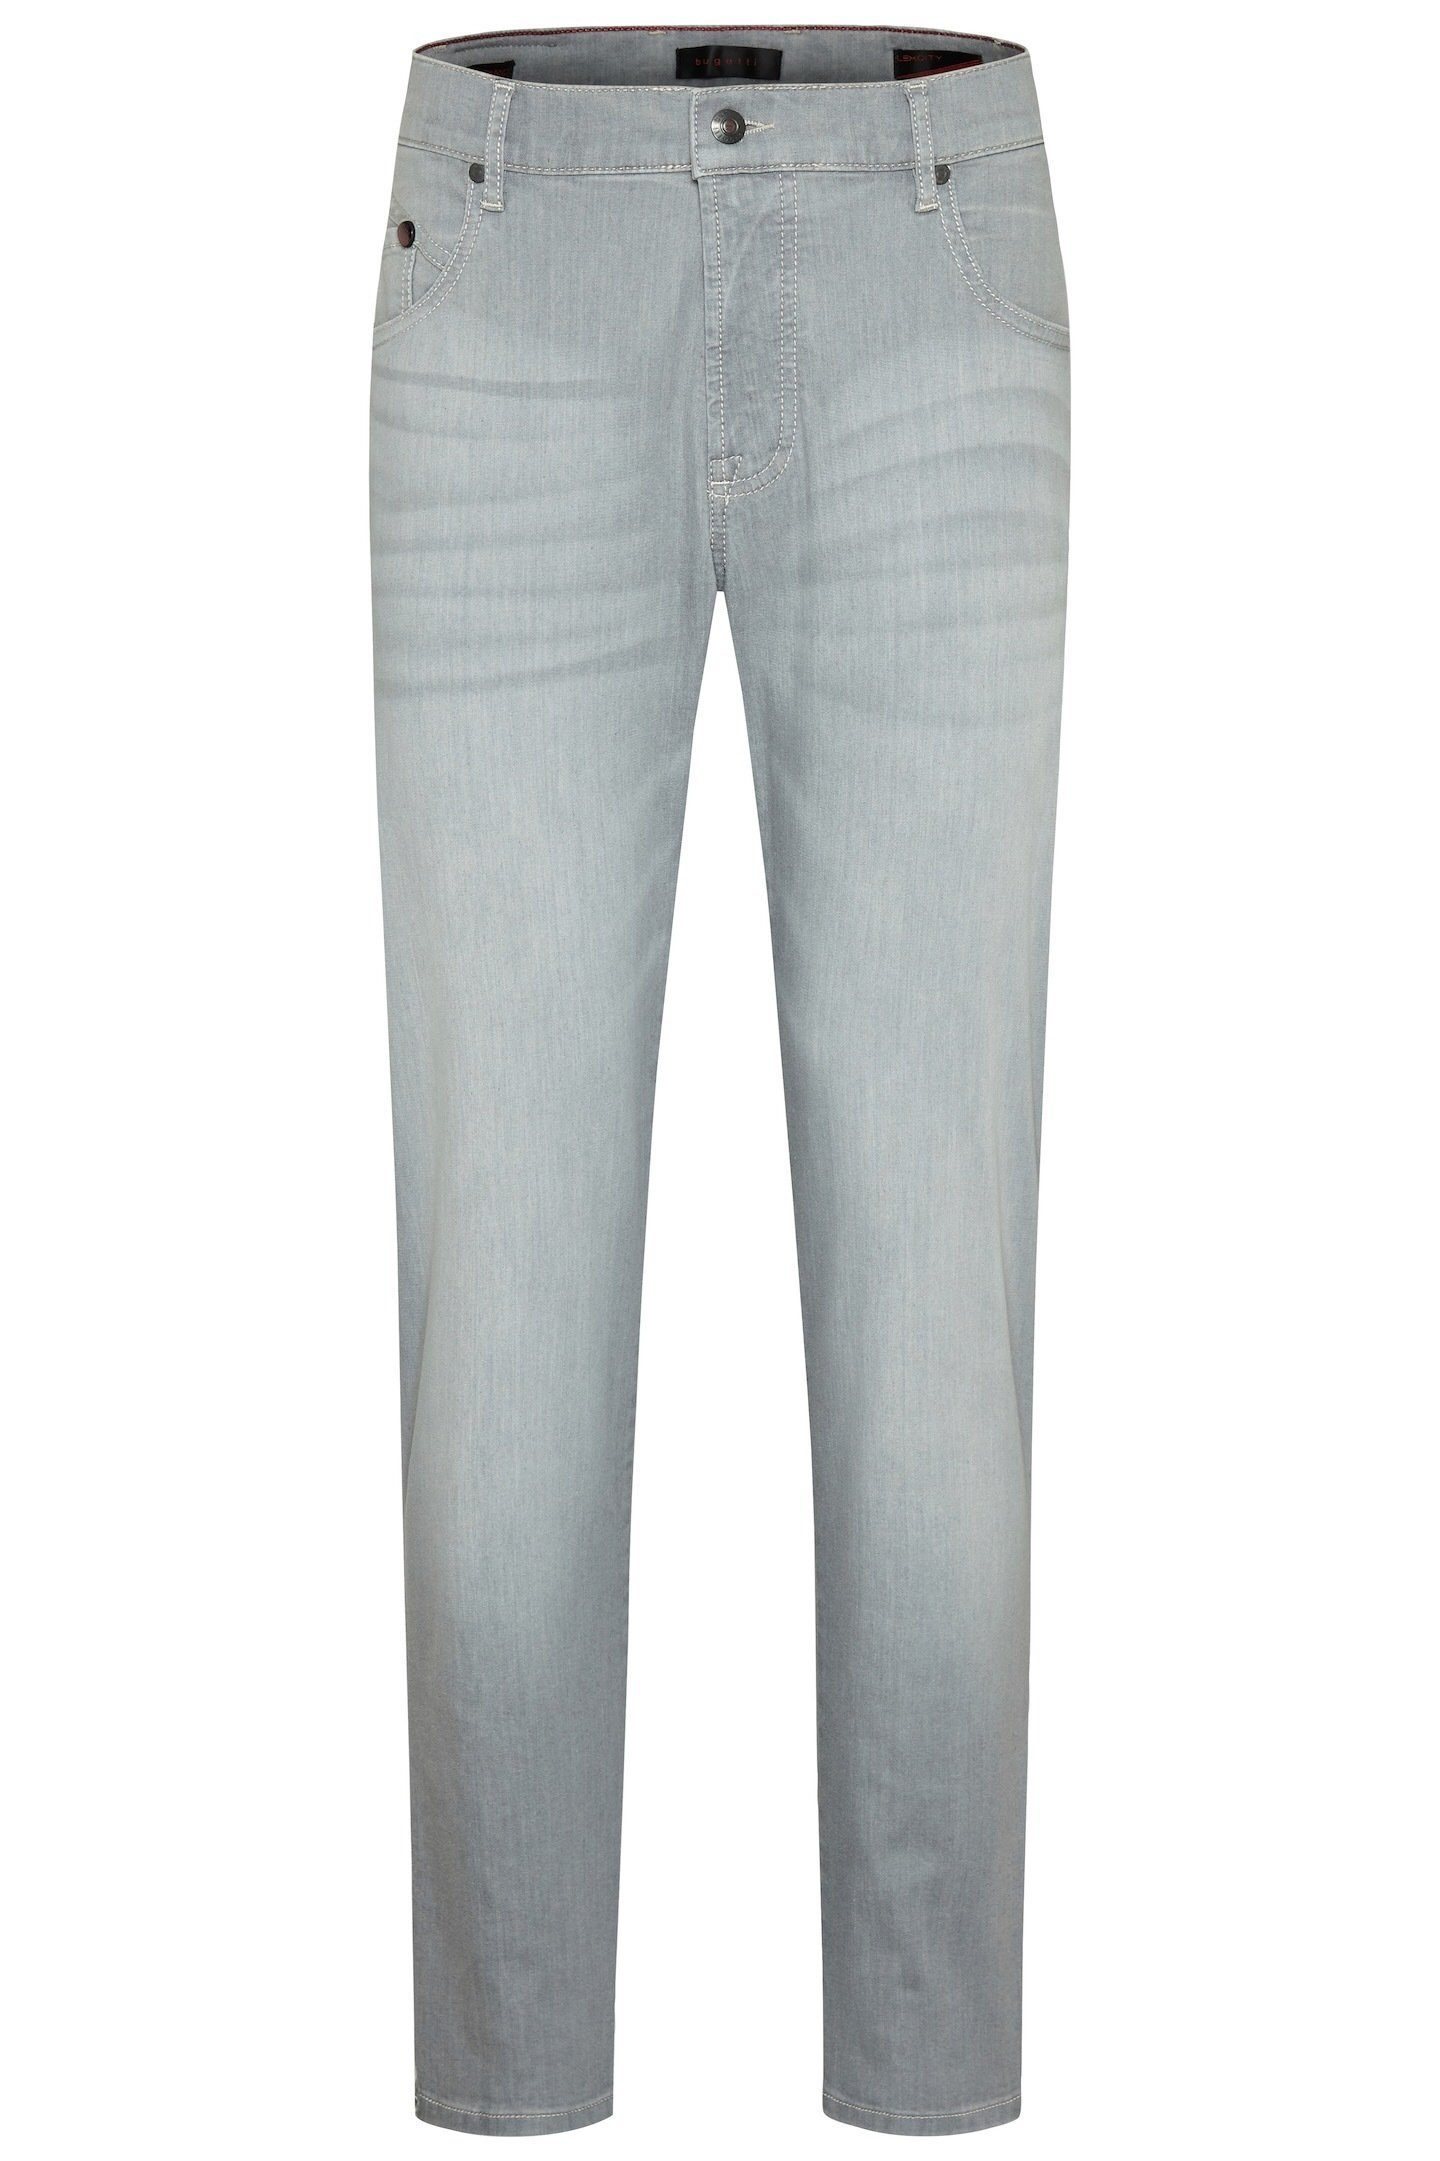 bugatti 5-Pocket-Jeans grau Used-Waschung mit